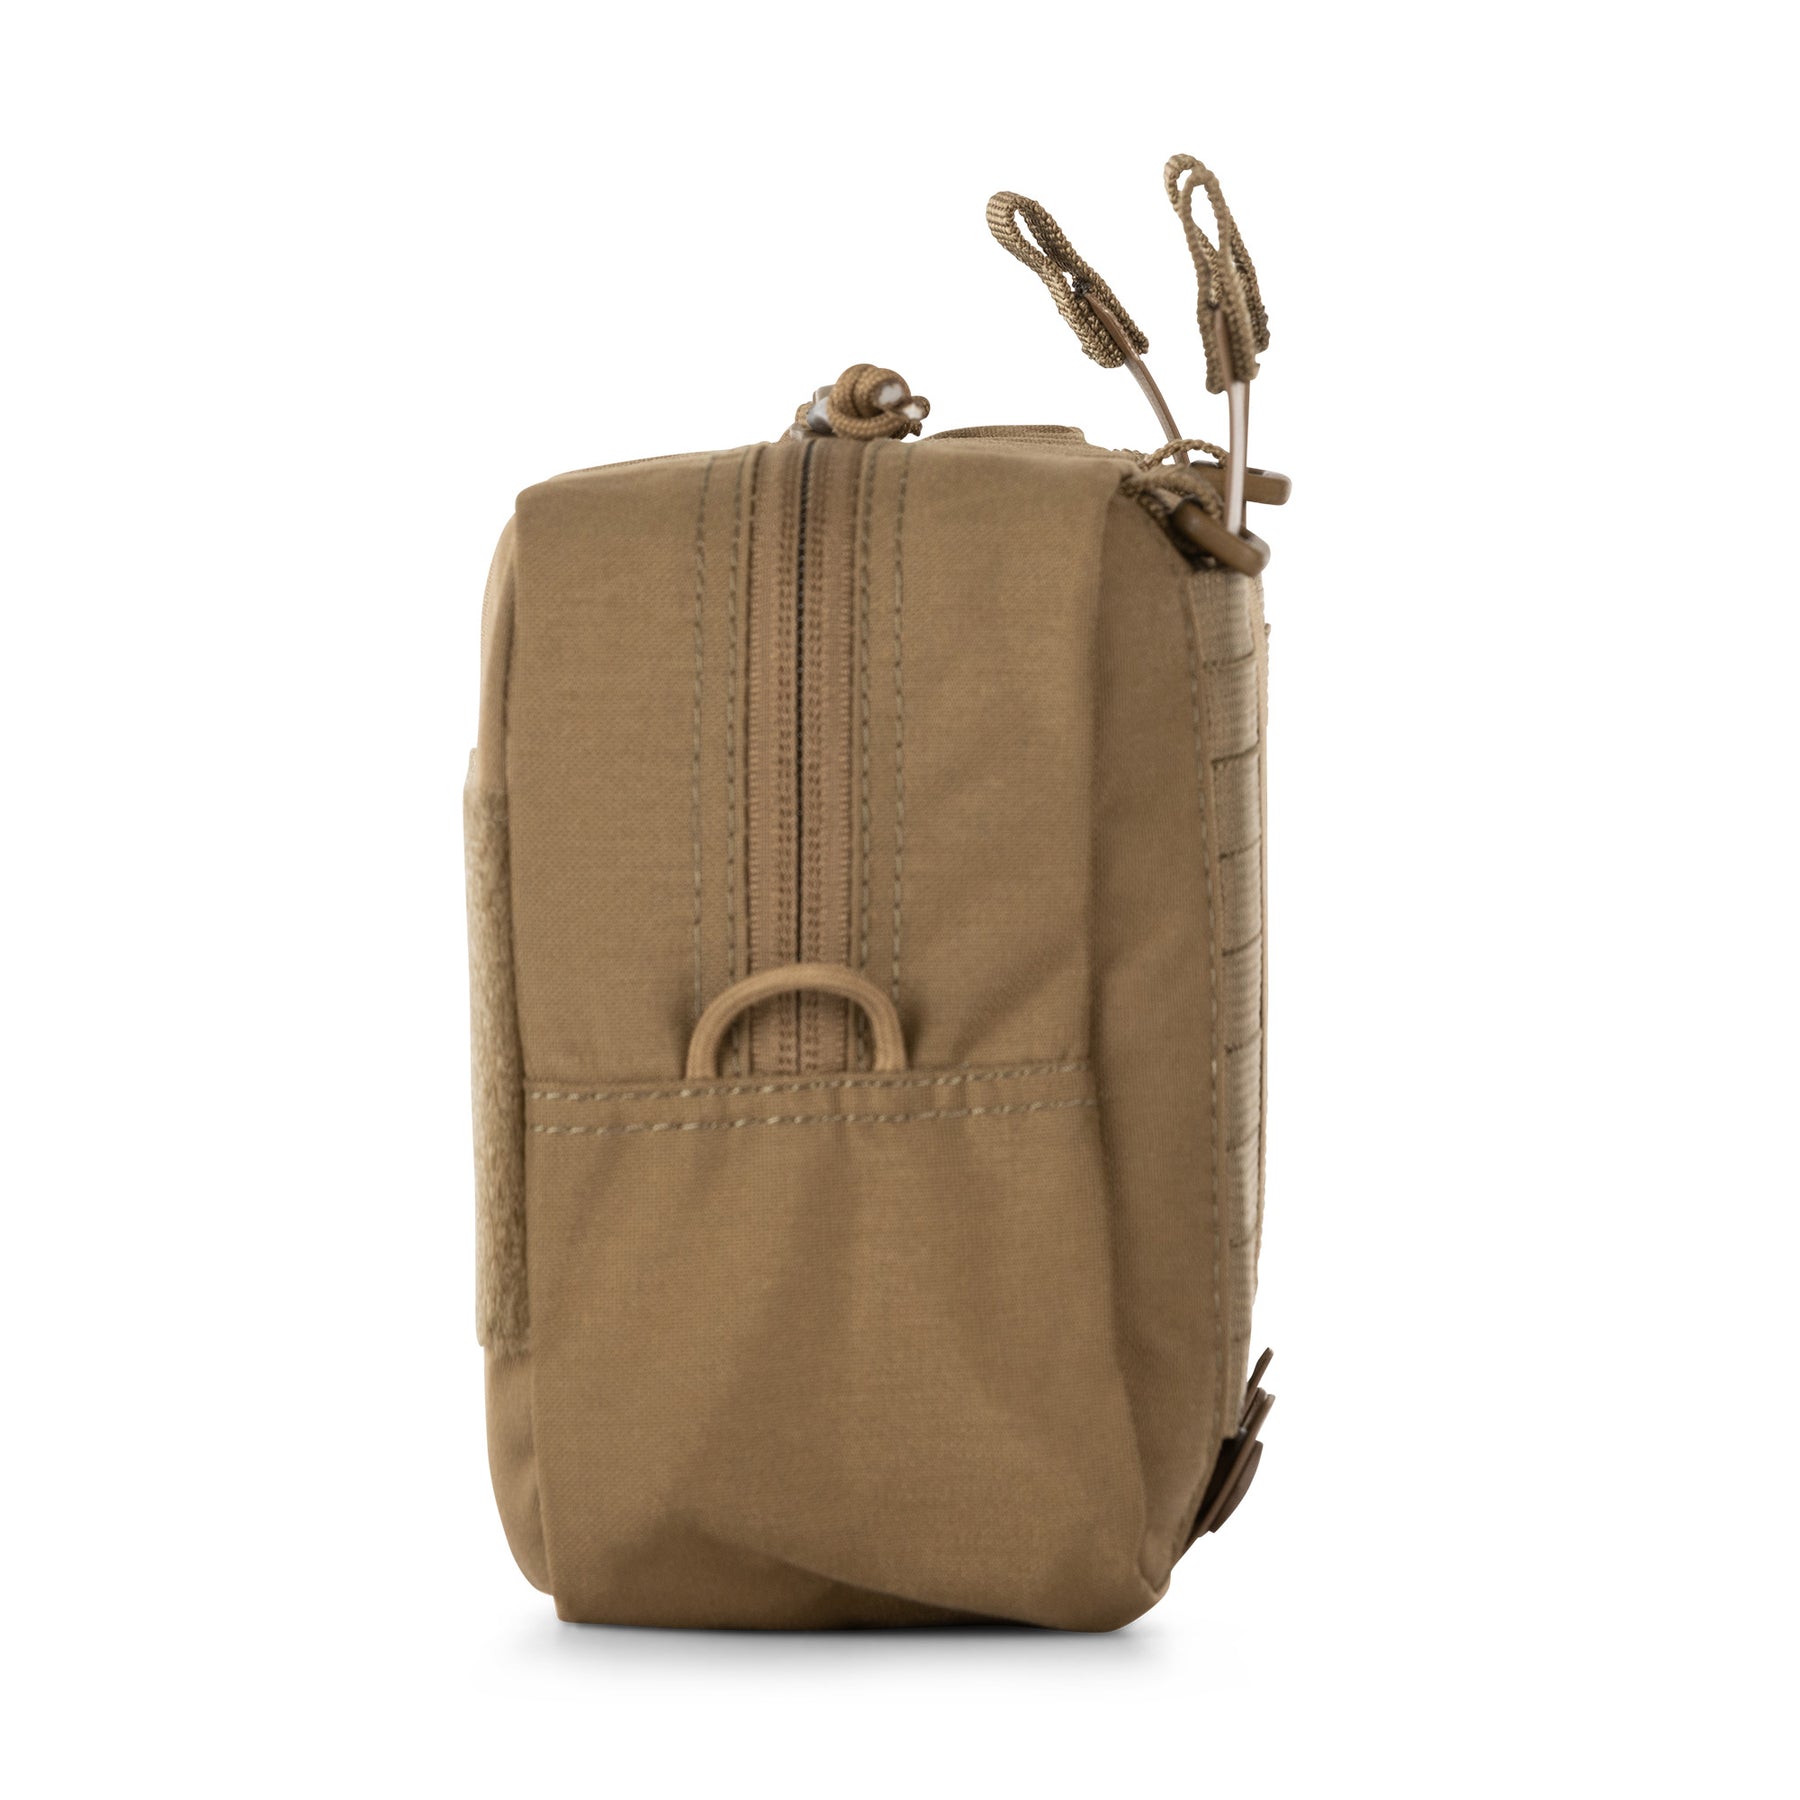 tasca MOLLE orizzontale 9x6 flex pouch di 5.11 sabbia (kangaroo) - vista laterale sinistra